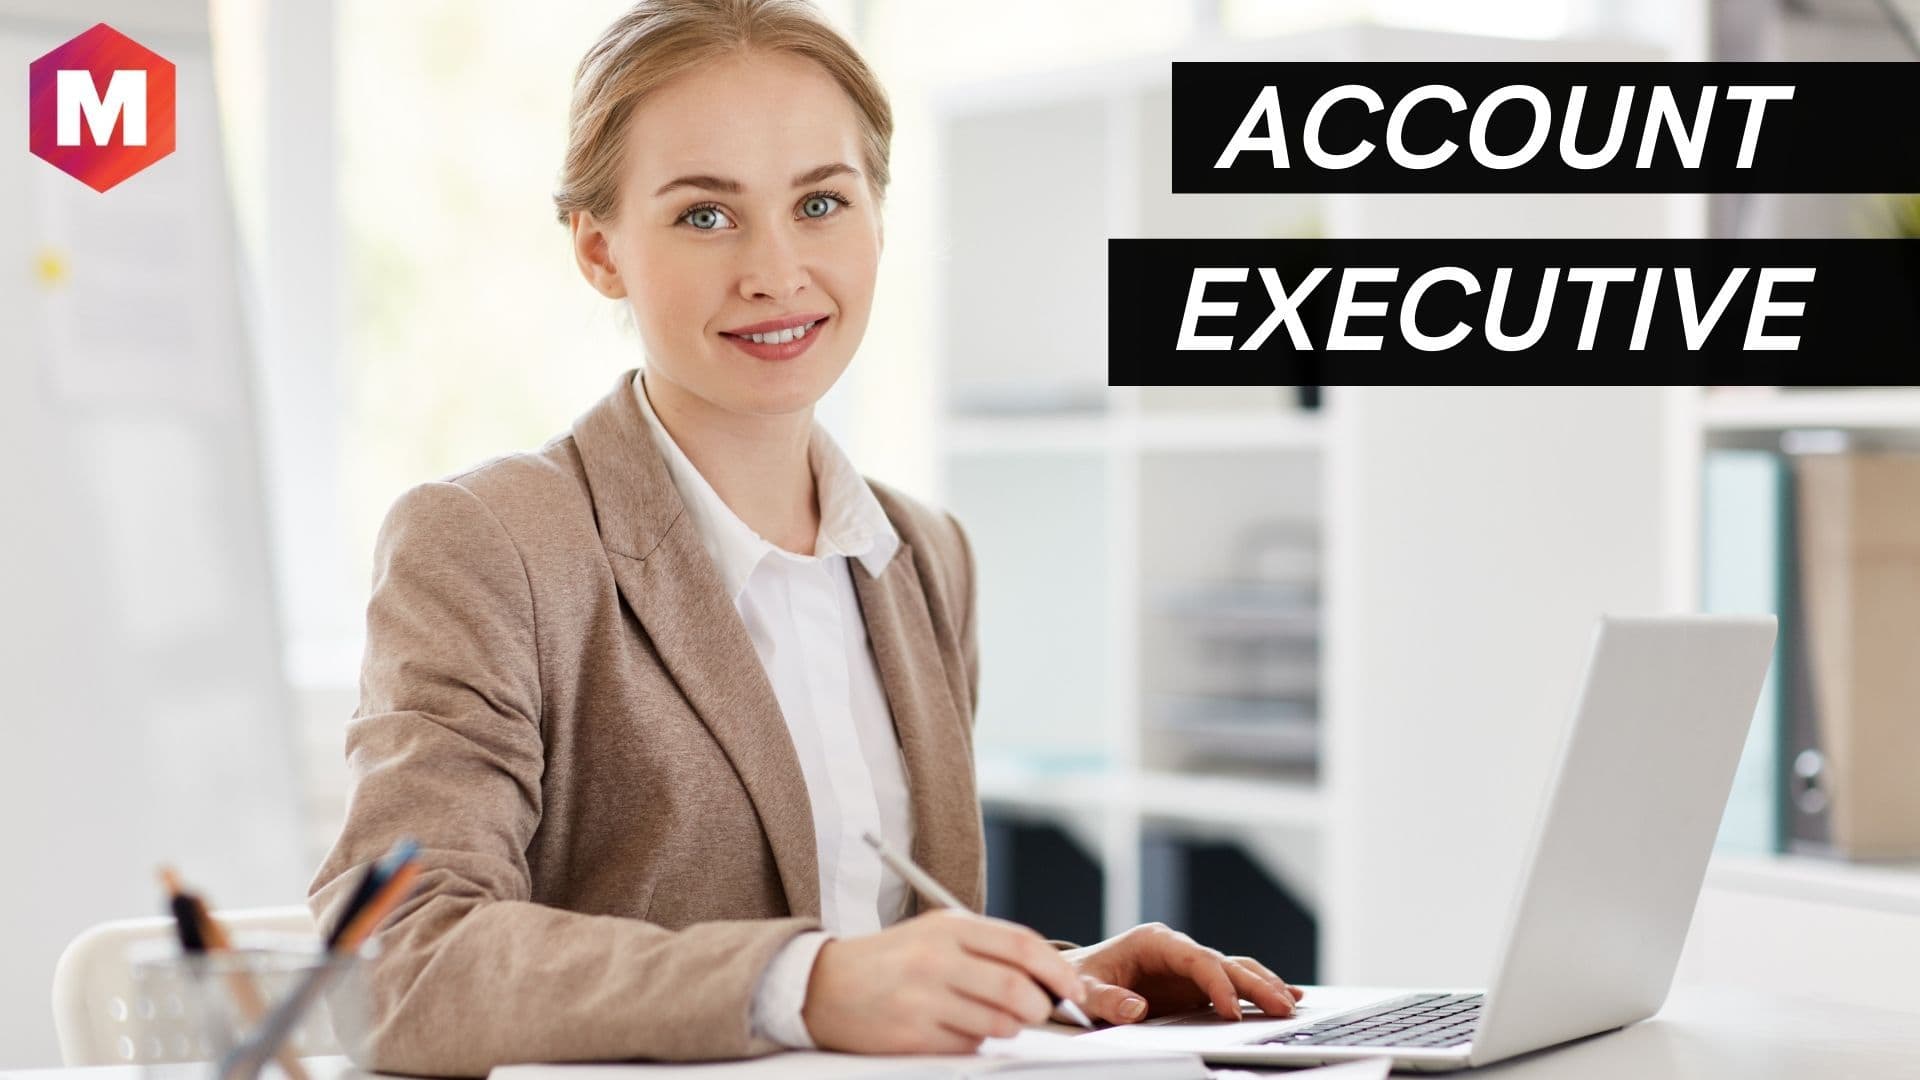 Account Executive - Definition, Skills & Responsibilities | Marketing91